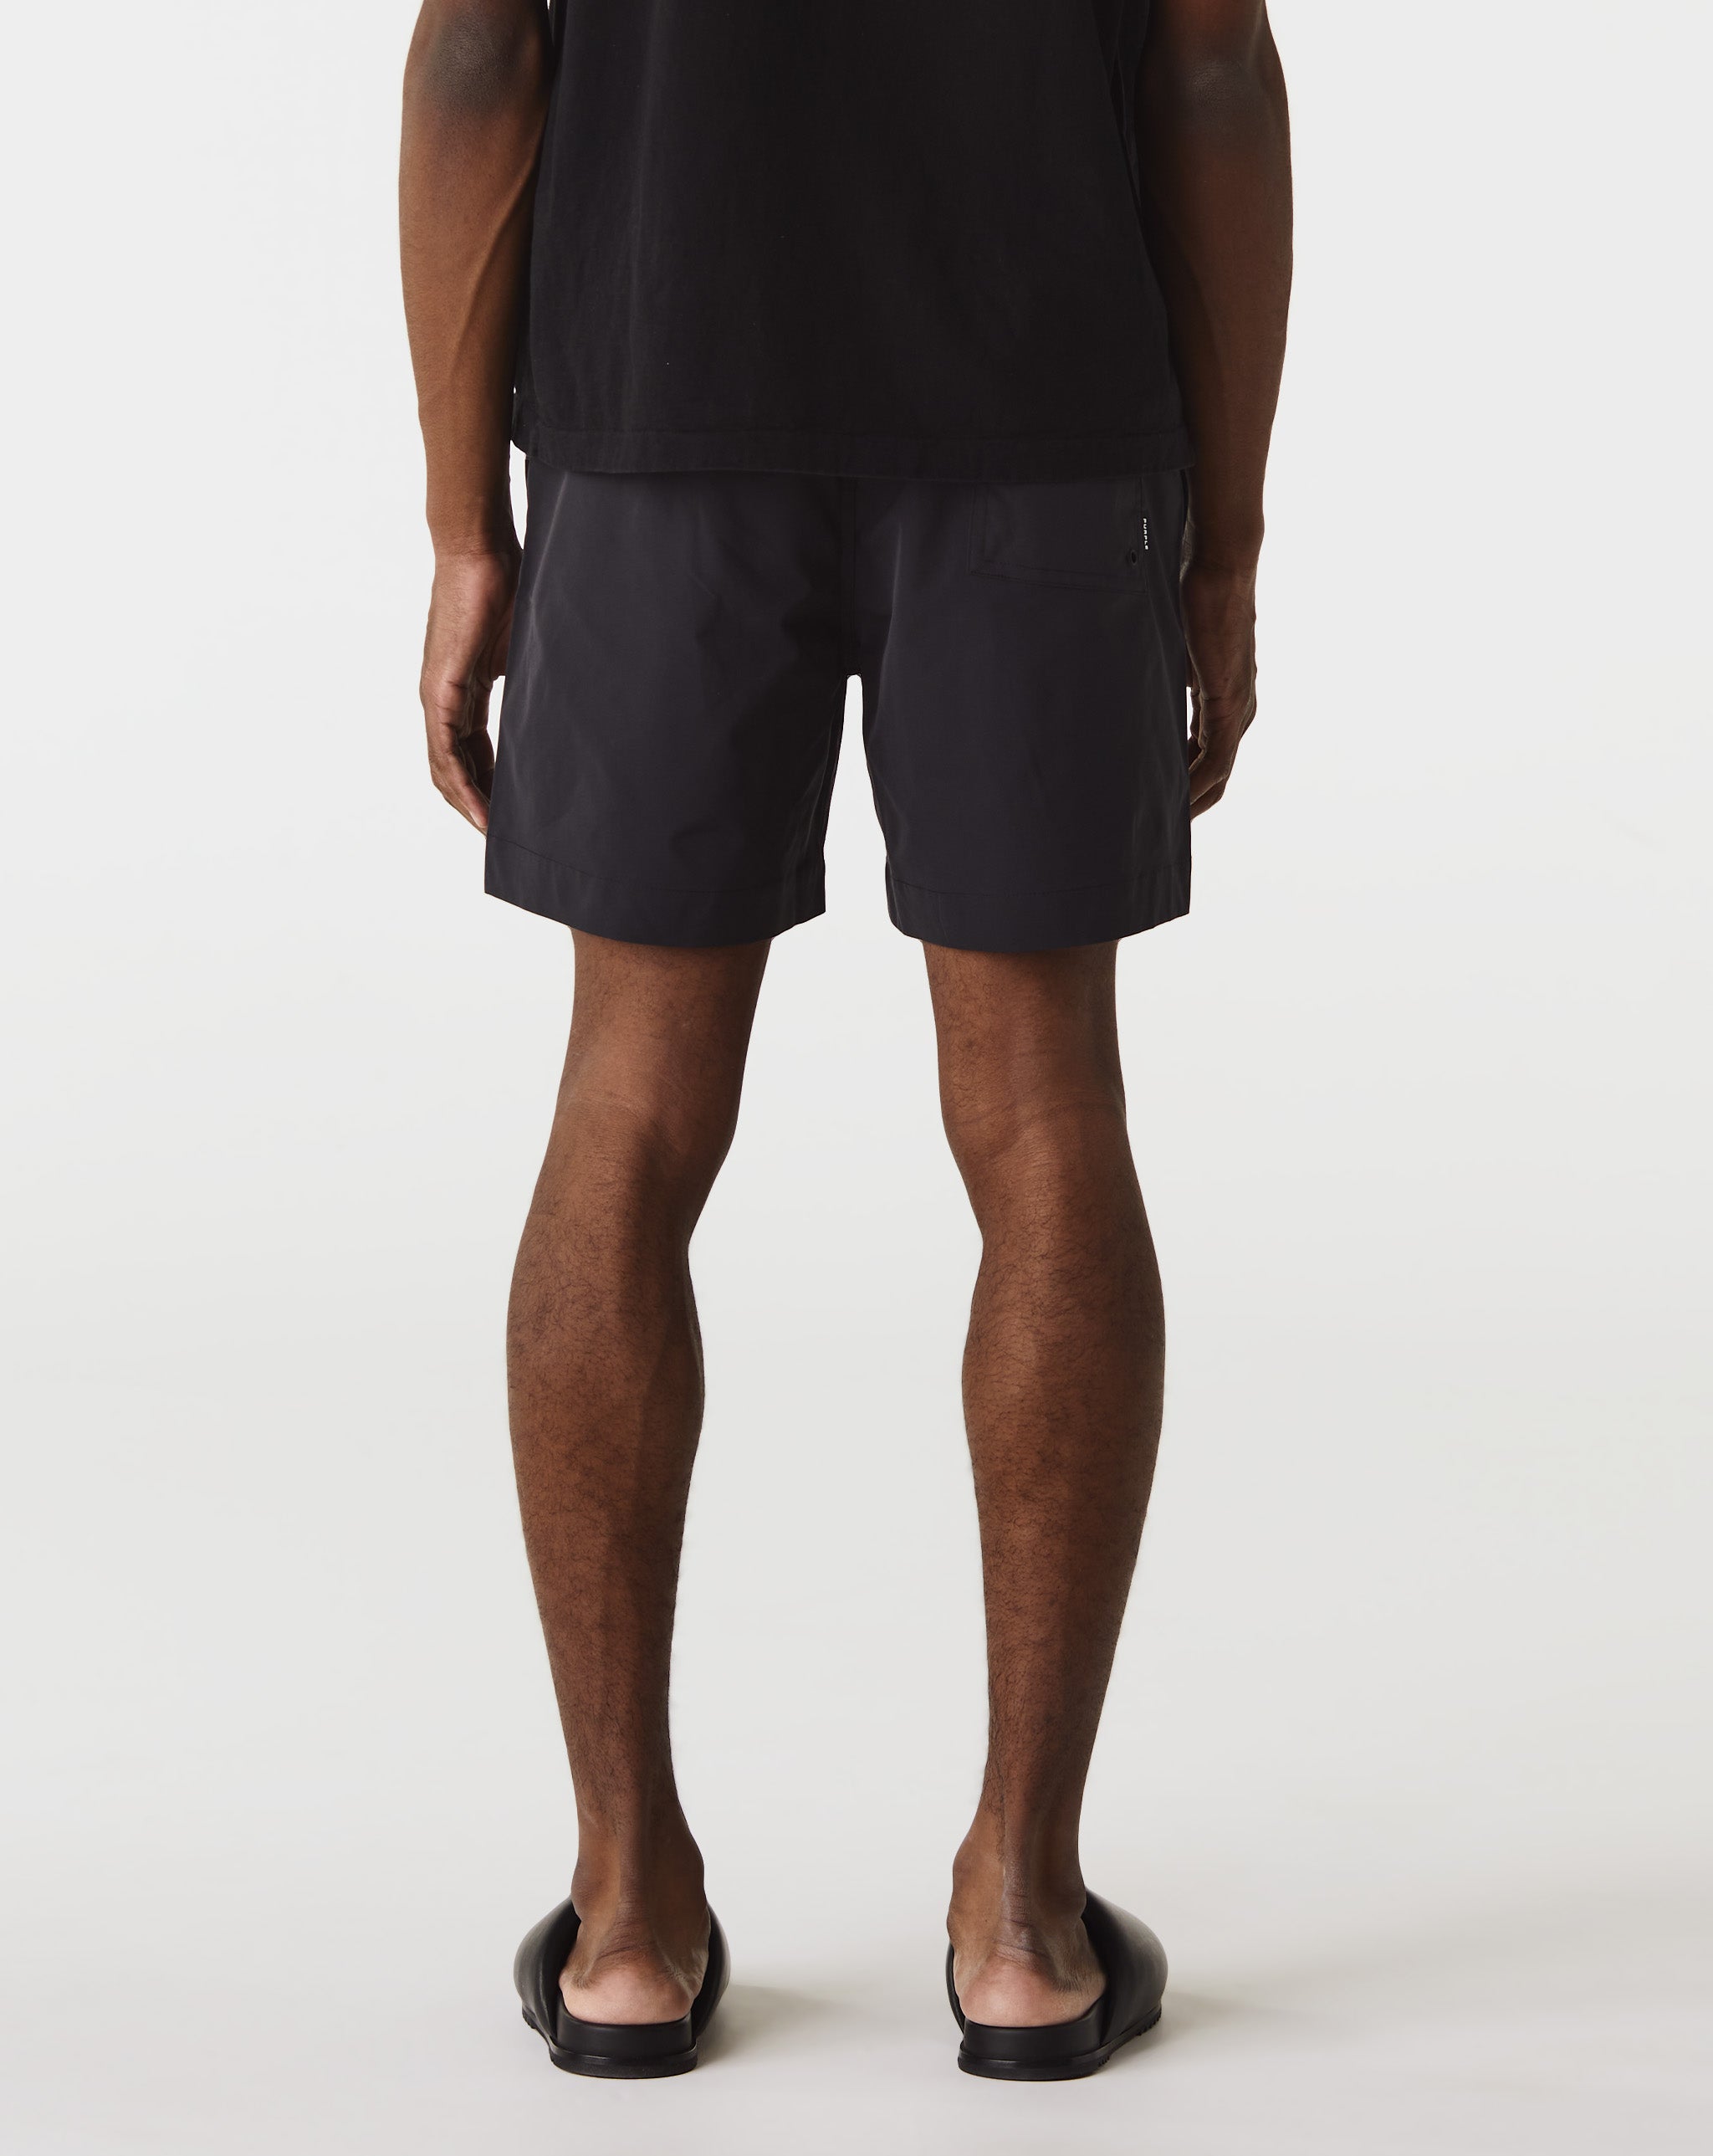 Purple Brand All Round print shorts  - Cheap 127-0 Jordan outlet